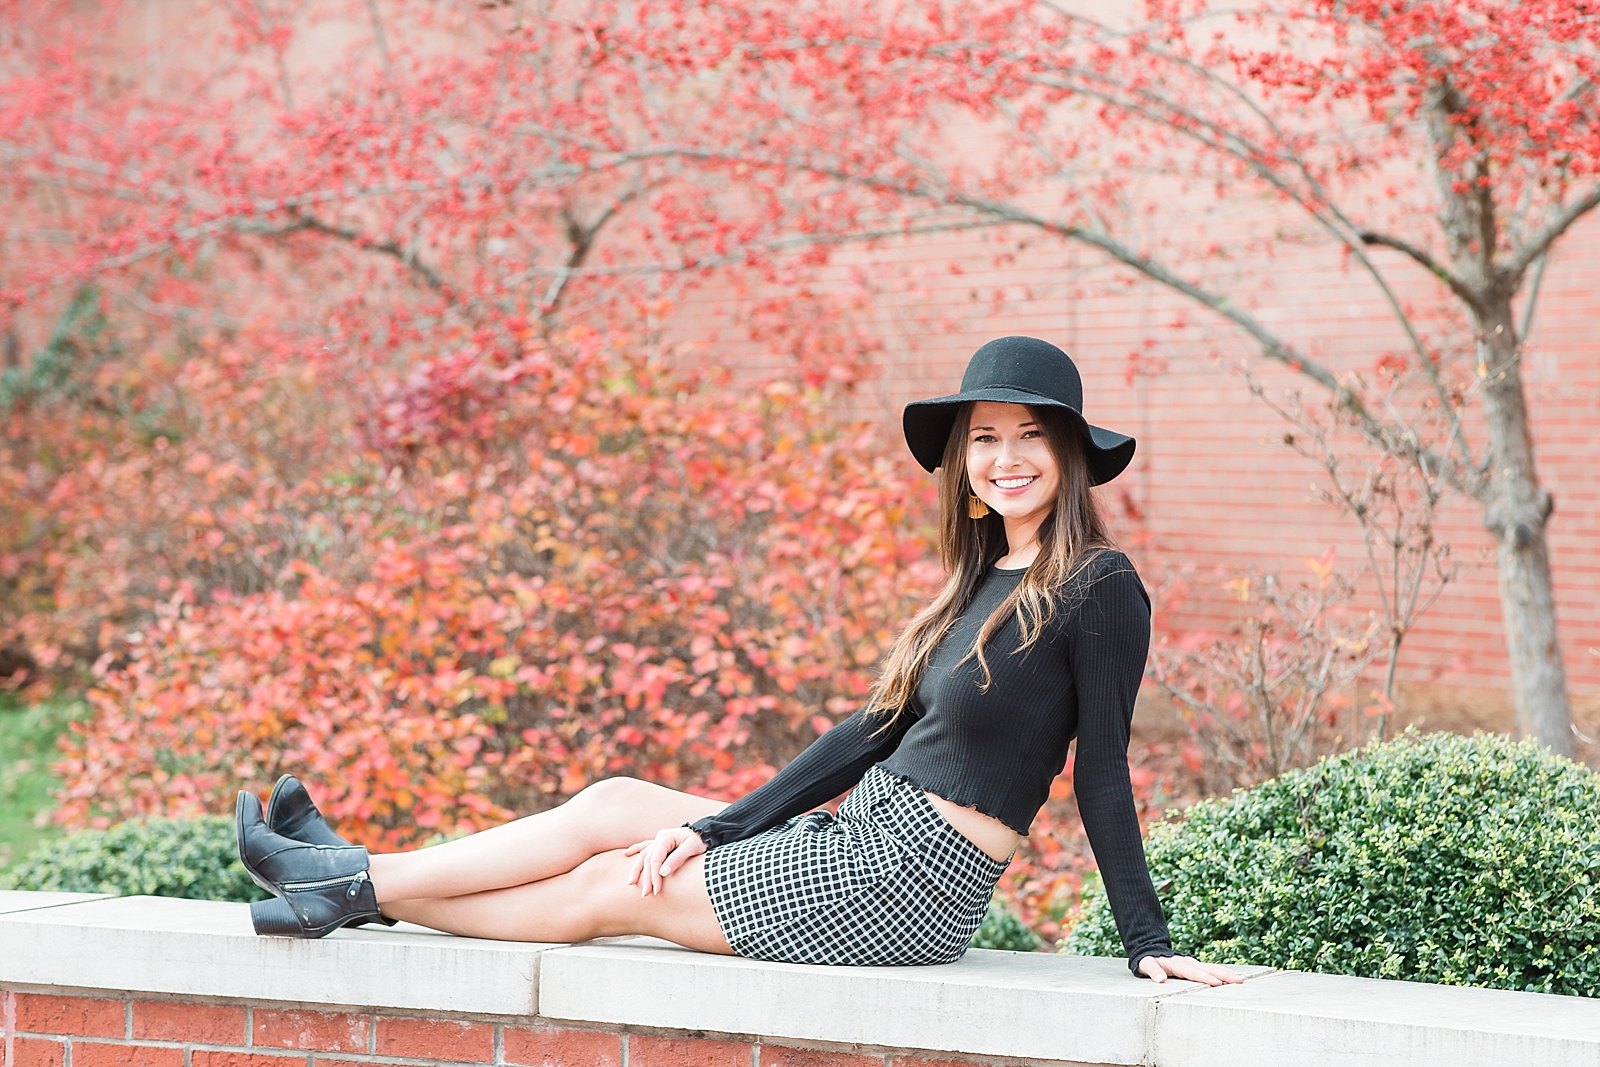 Western Carolina University Senior Sierra sitting on brick wall in front of red trees smiling at camera Photo